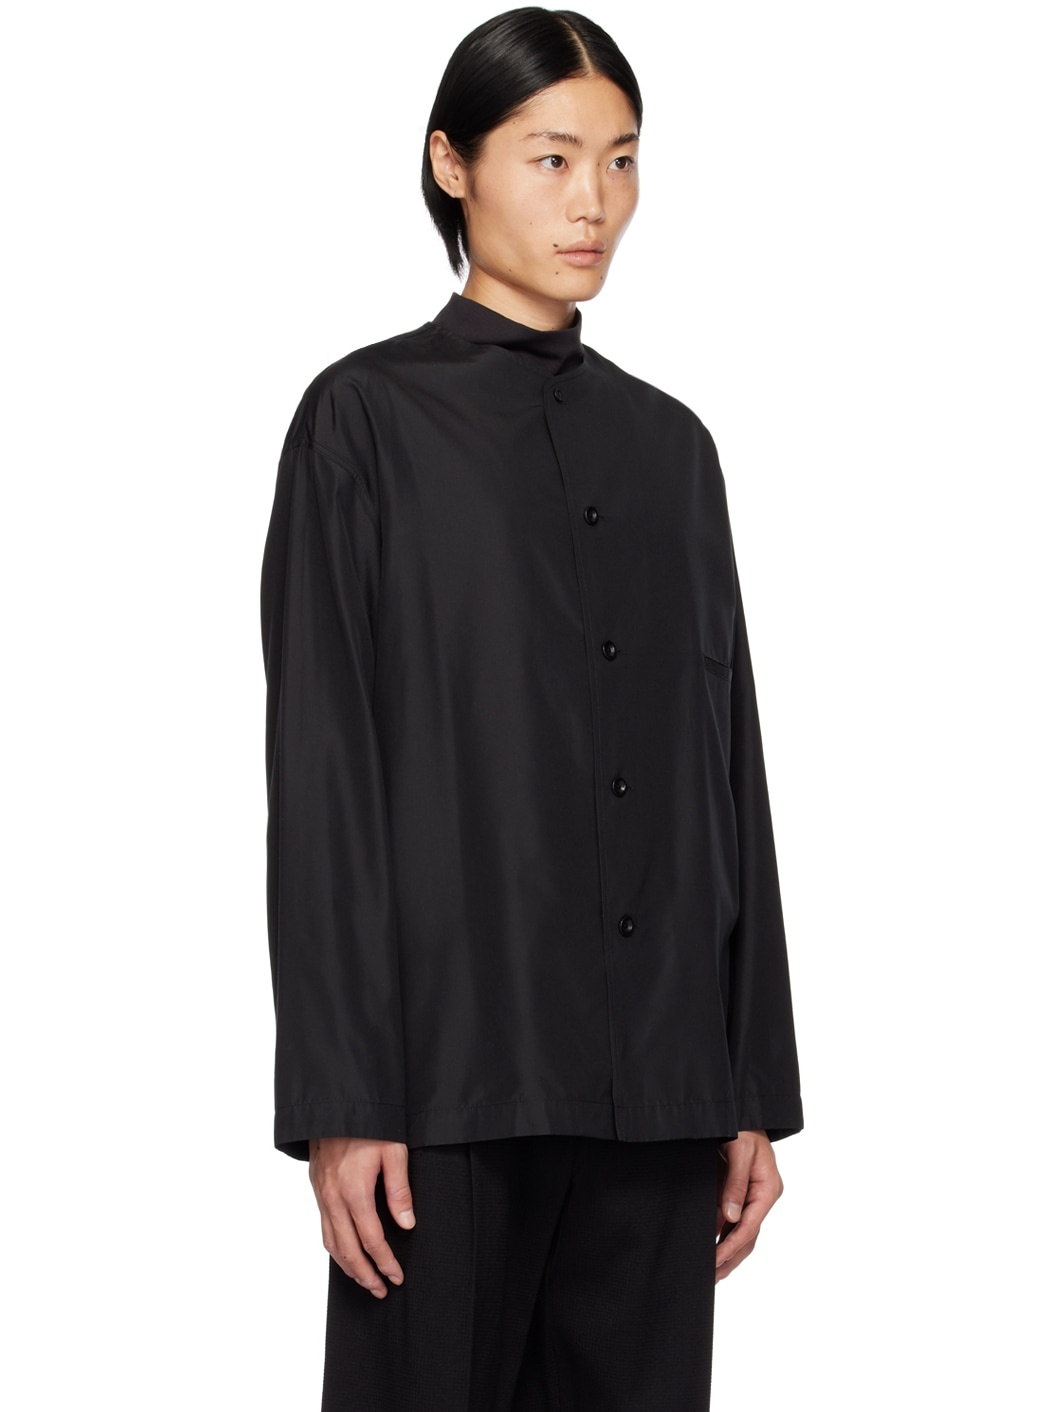 Black Collarless Shirt - 2